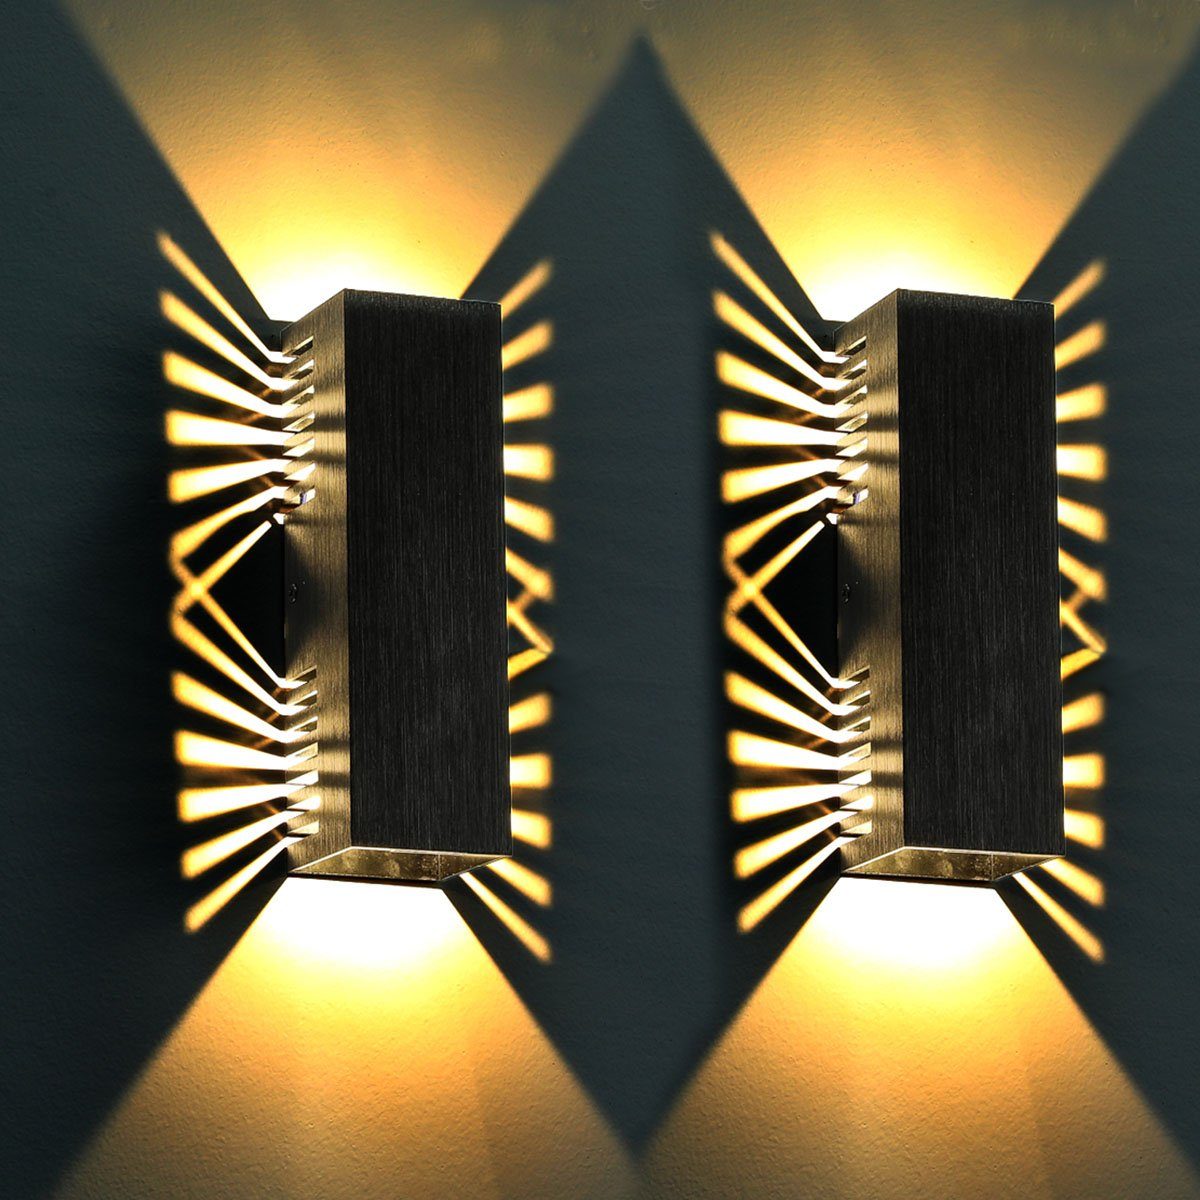 oyajia Wandleuchte 6W LED Wandleuchte indirekte Beleuchtung mit Schatteneffekt, Schwarz, LED fest integriert, Warmweiß, Up & Down Licht, Wandlampe aus Aluminium, Wohnzimmerbeleuchtung 2 Stück